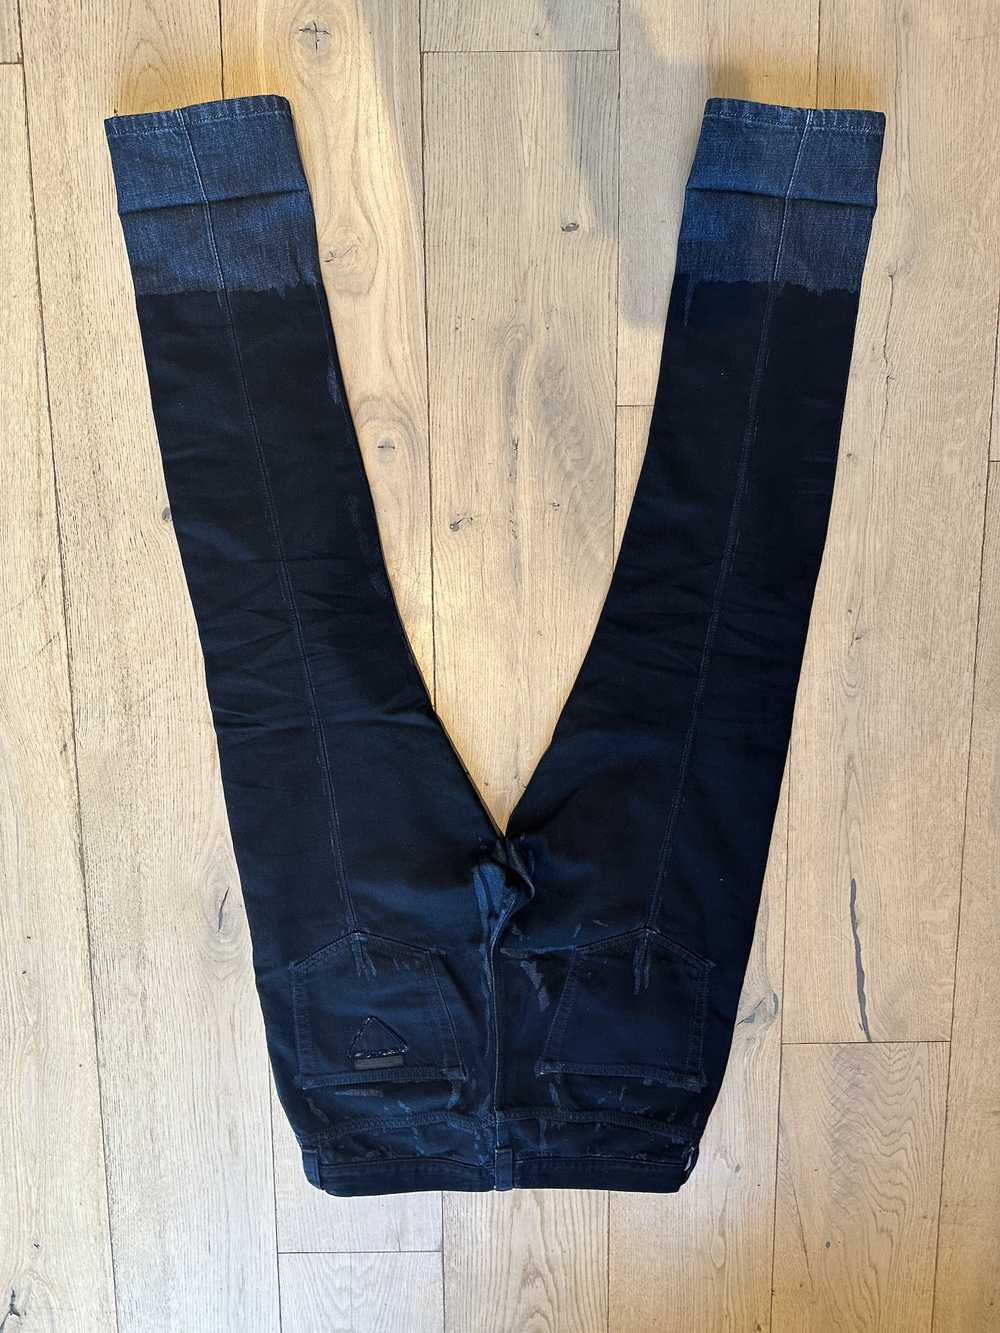 Prada Prada Over dyed slim fit jeans - image 5